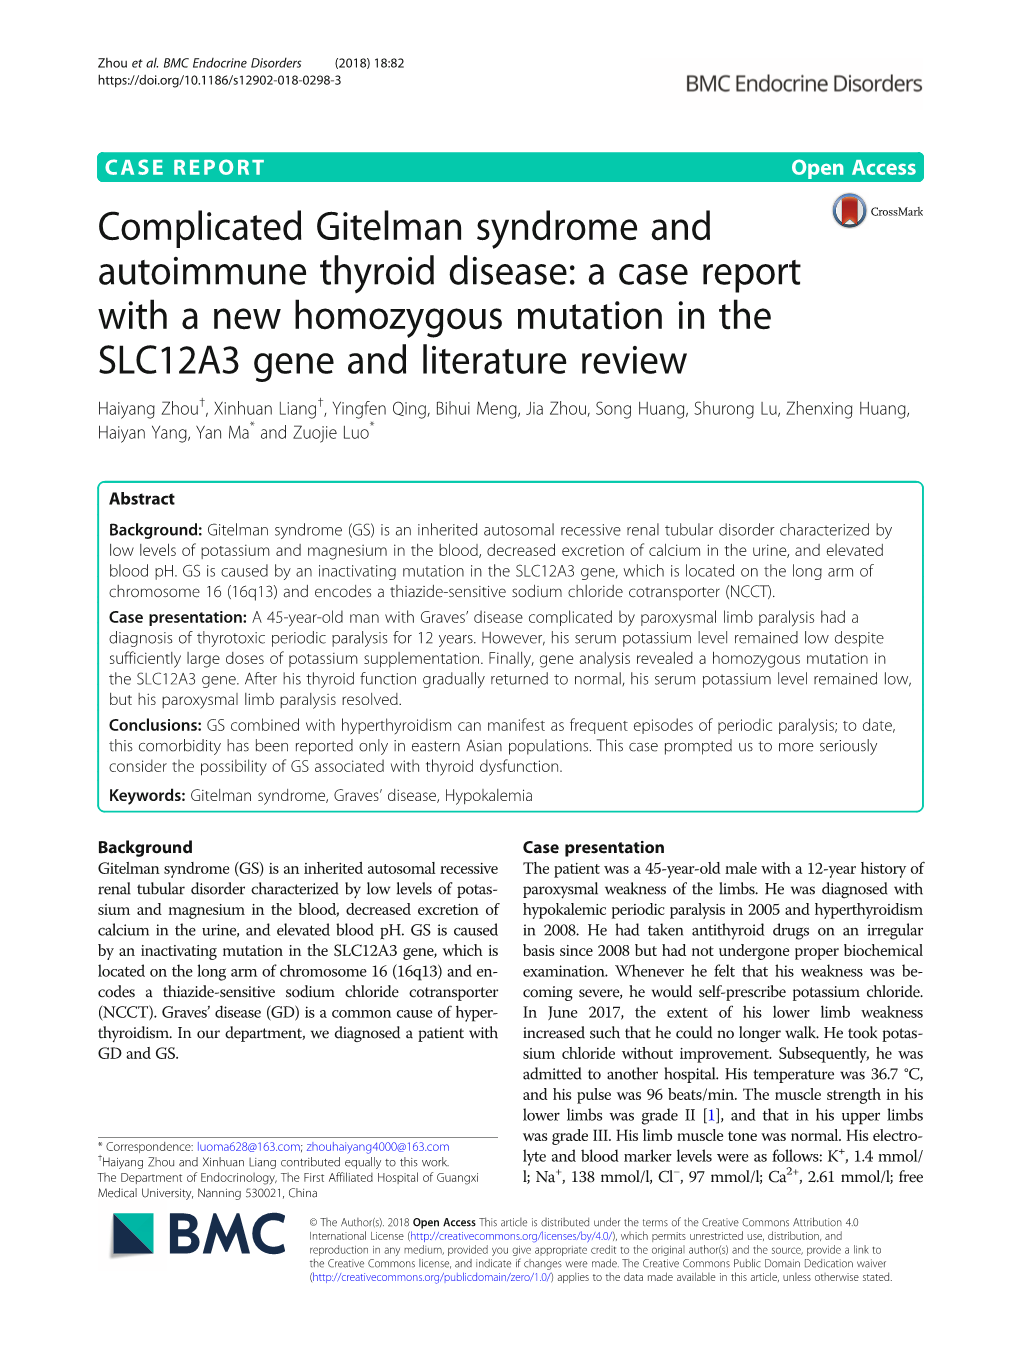 Complicated Gitelman Syndrome and Autoimmune Thyroid Disease